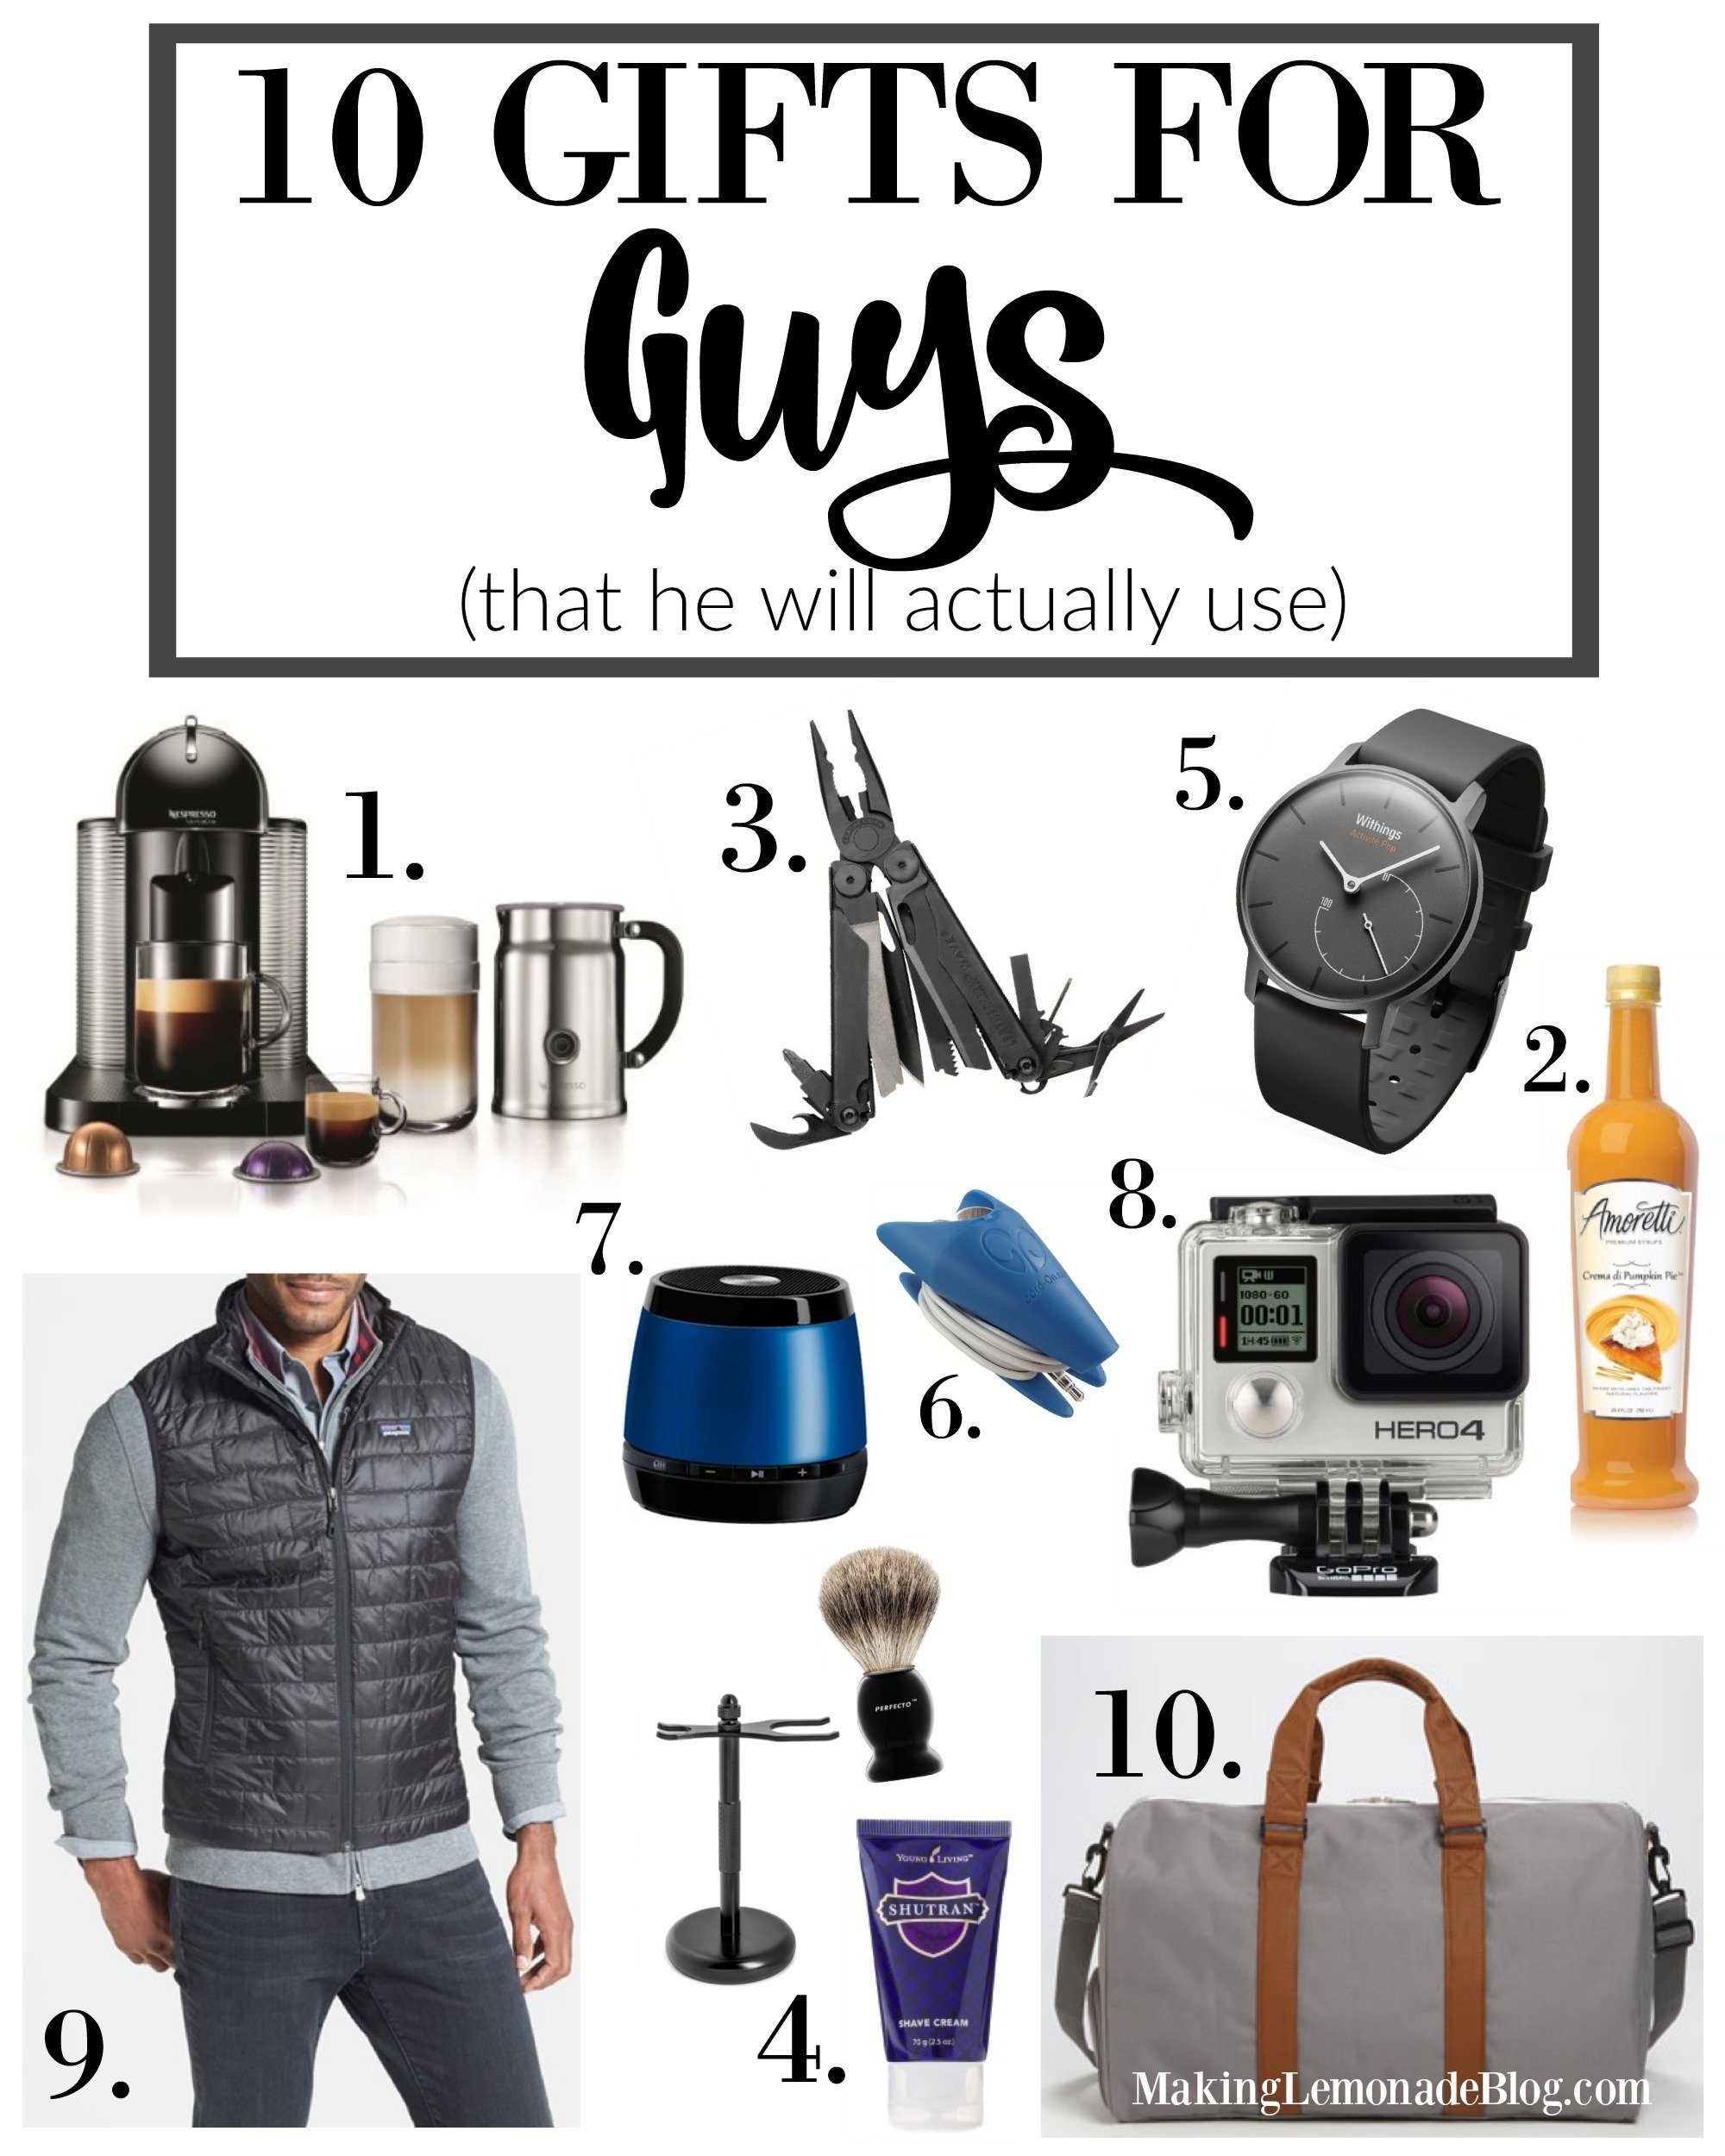 Stunning Top Gift Ideas For Men